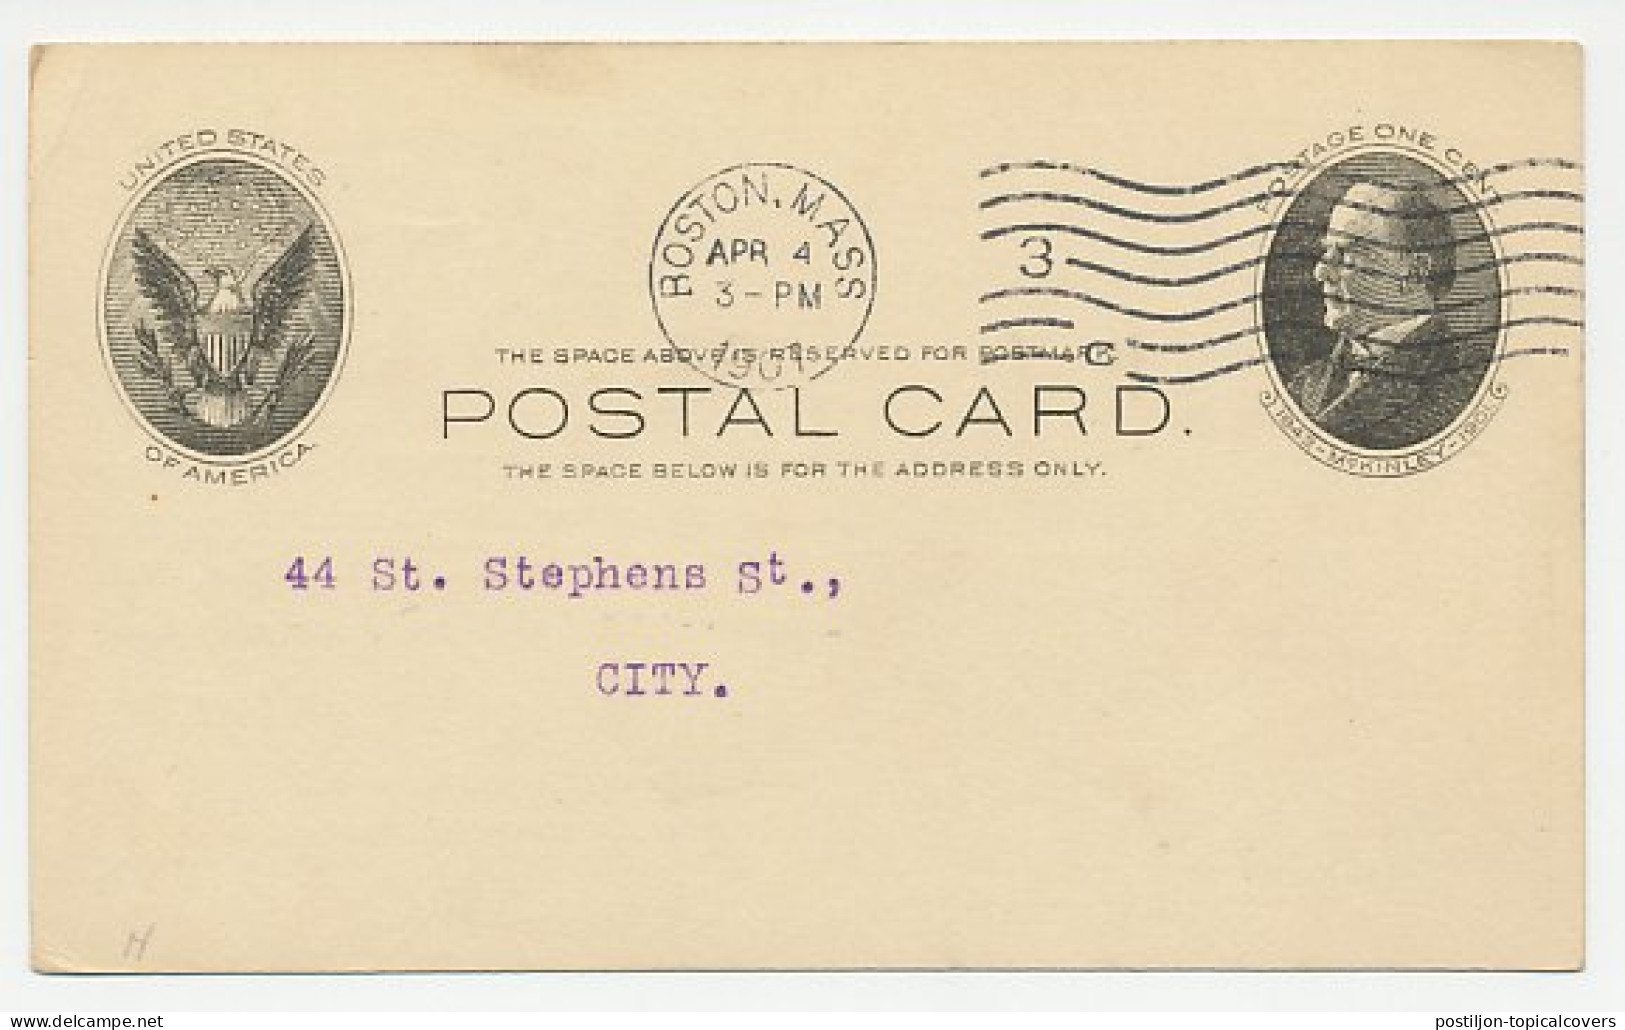 Postal Stationery USA 1907 Japanese Tea Pot - Other & Unclassified